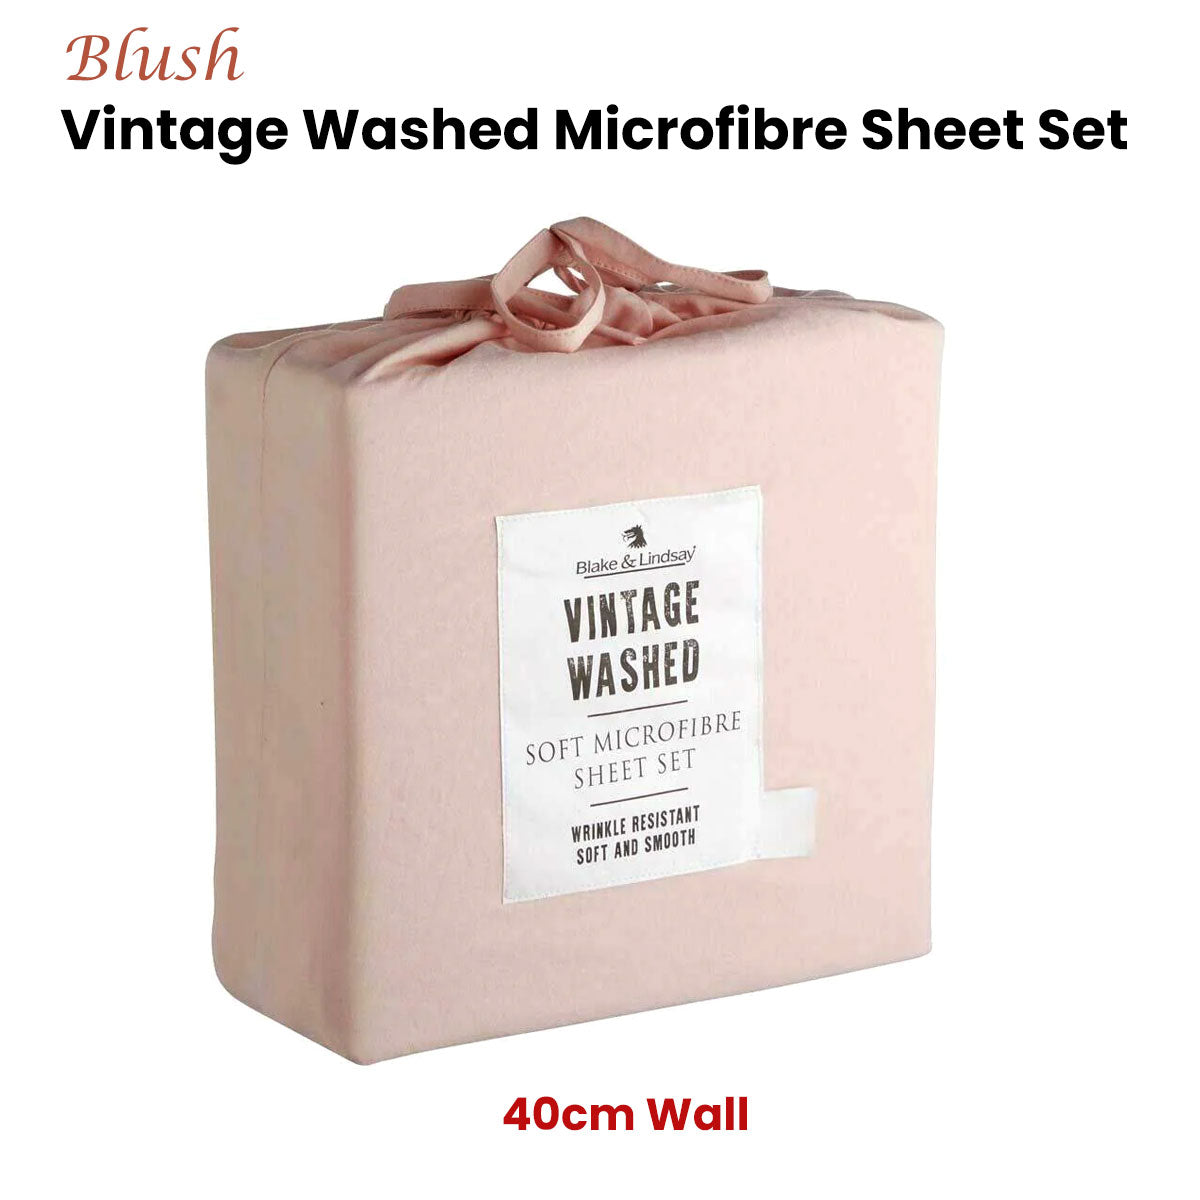 Blake & Lindsay Blush Vintage Washed Microfibre Sheet Set 40cm Wall Queen